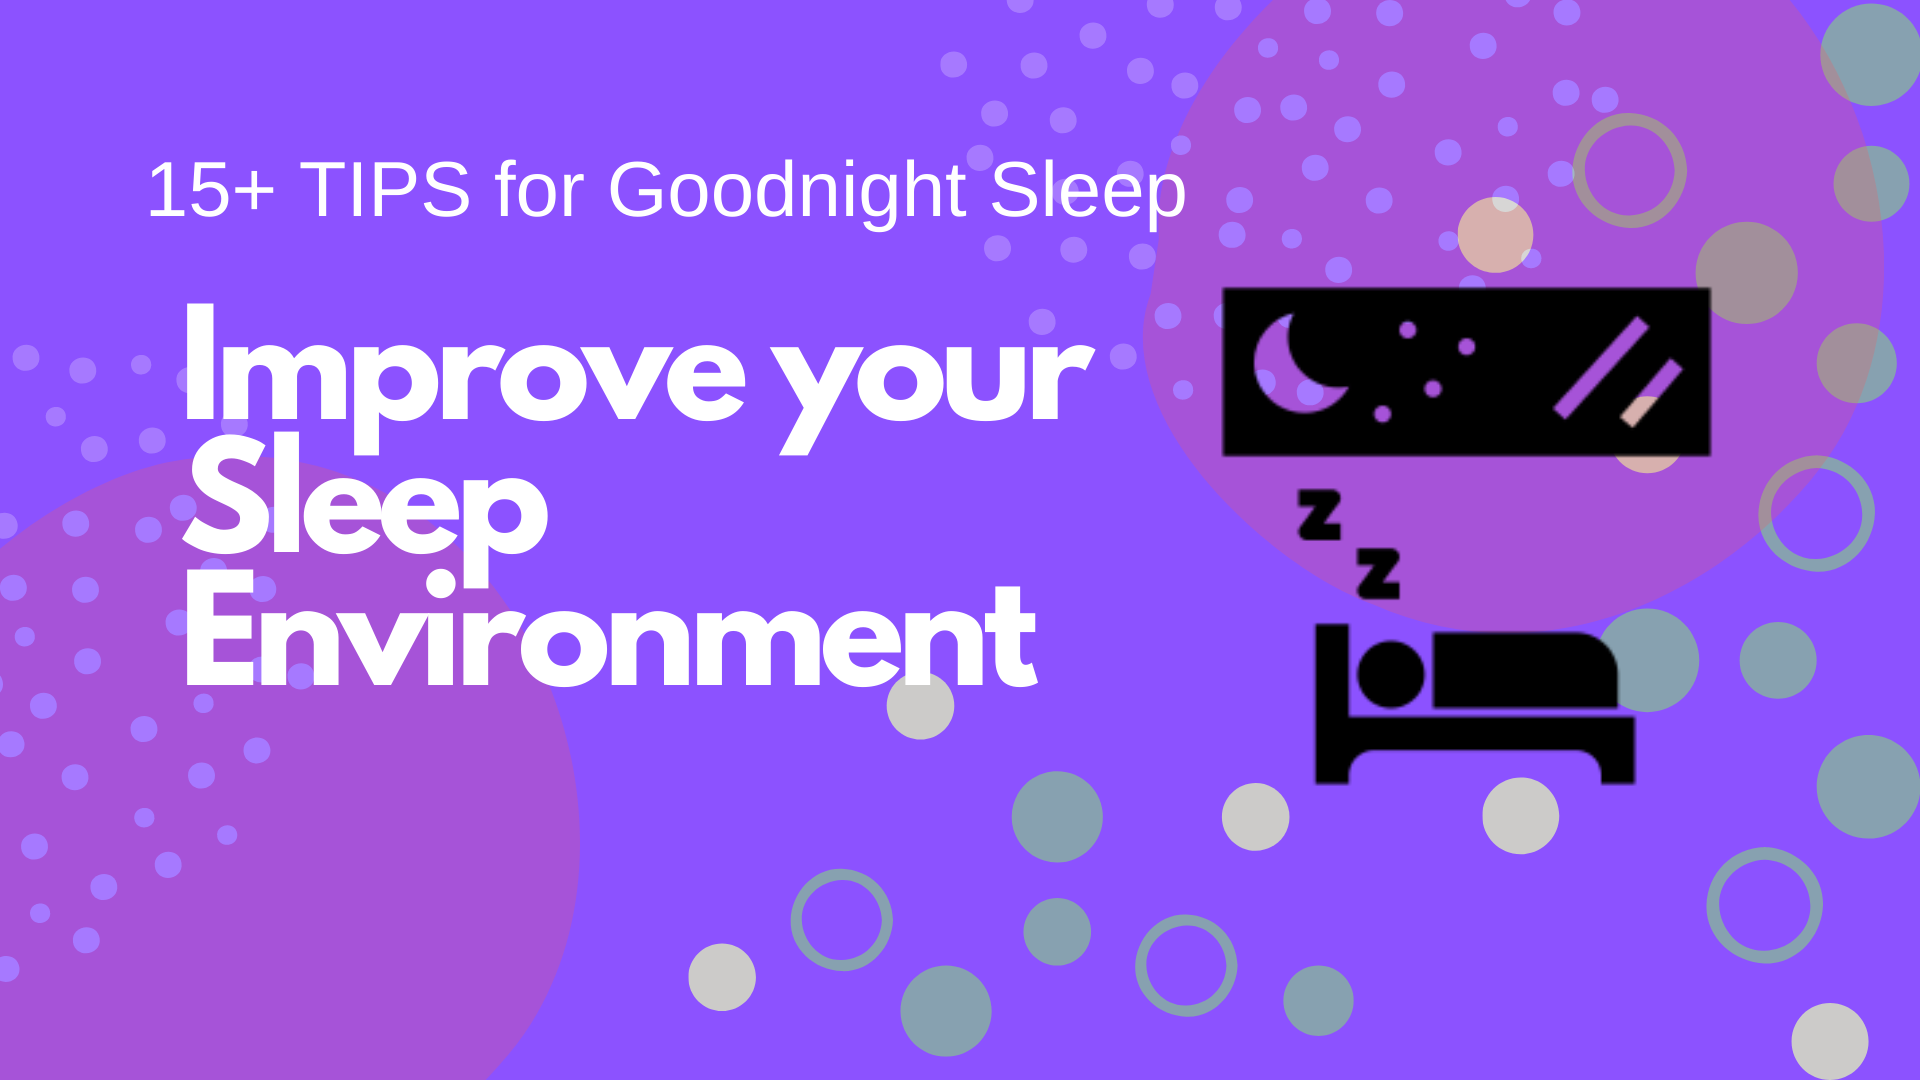    Improve your Sleeping Environment